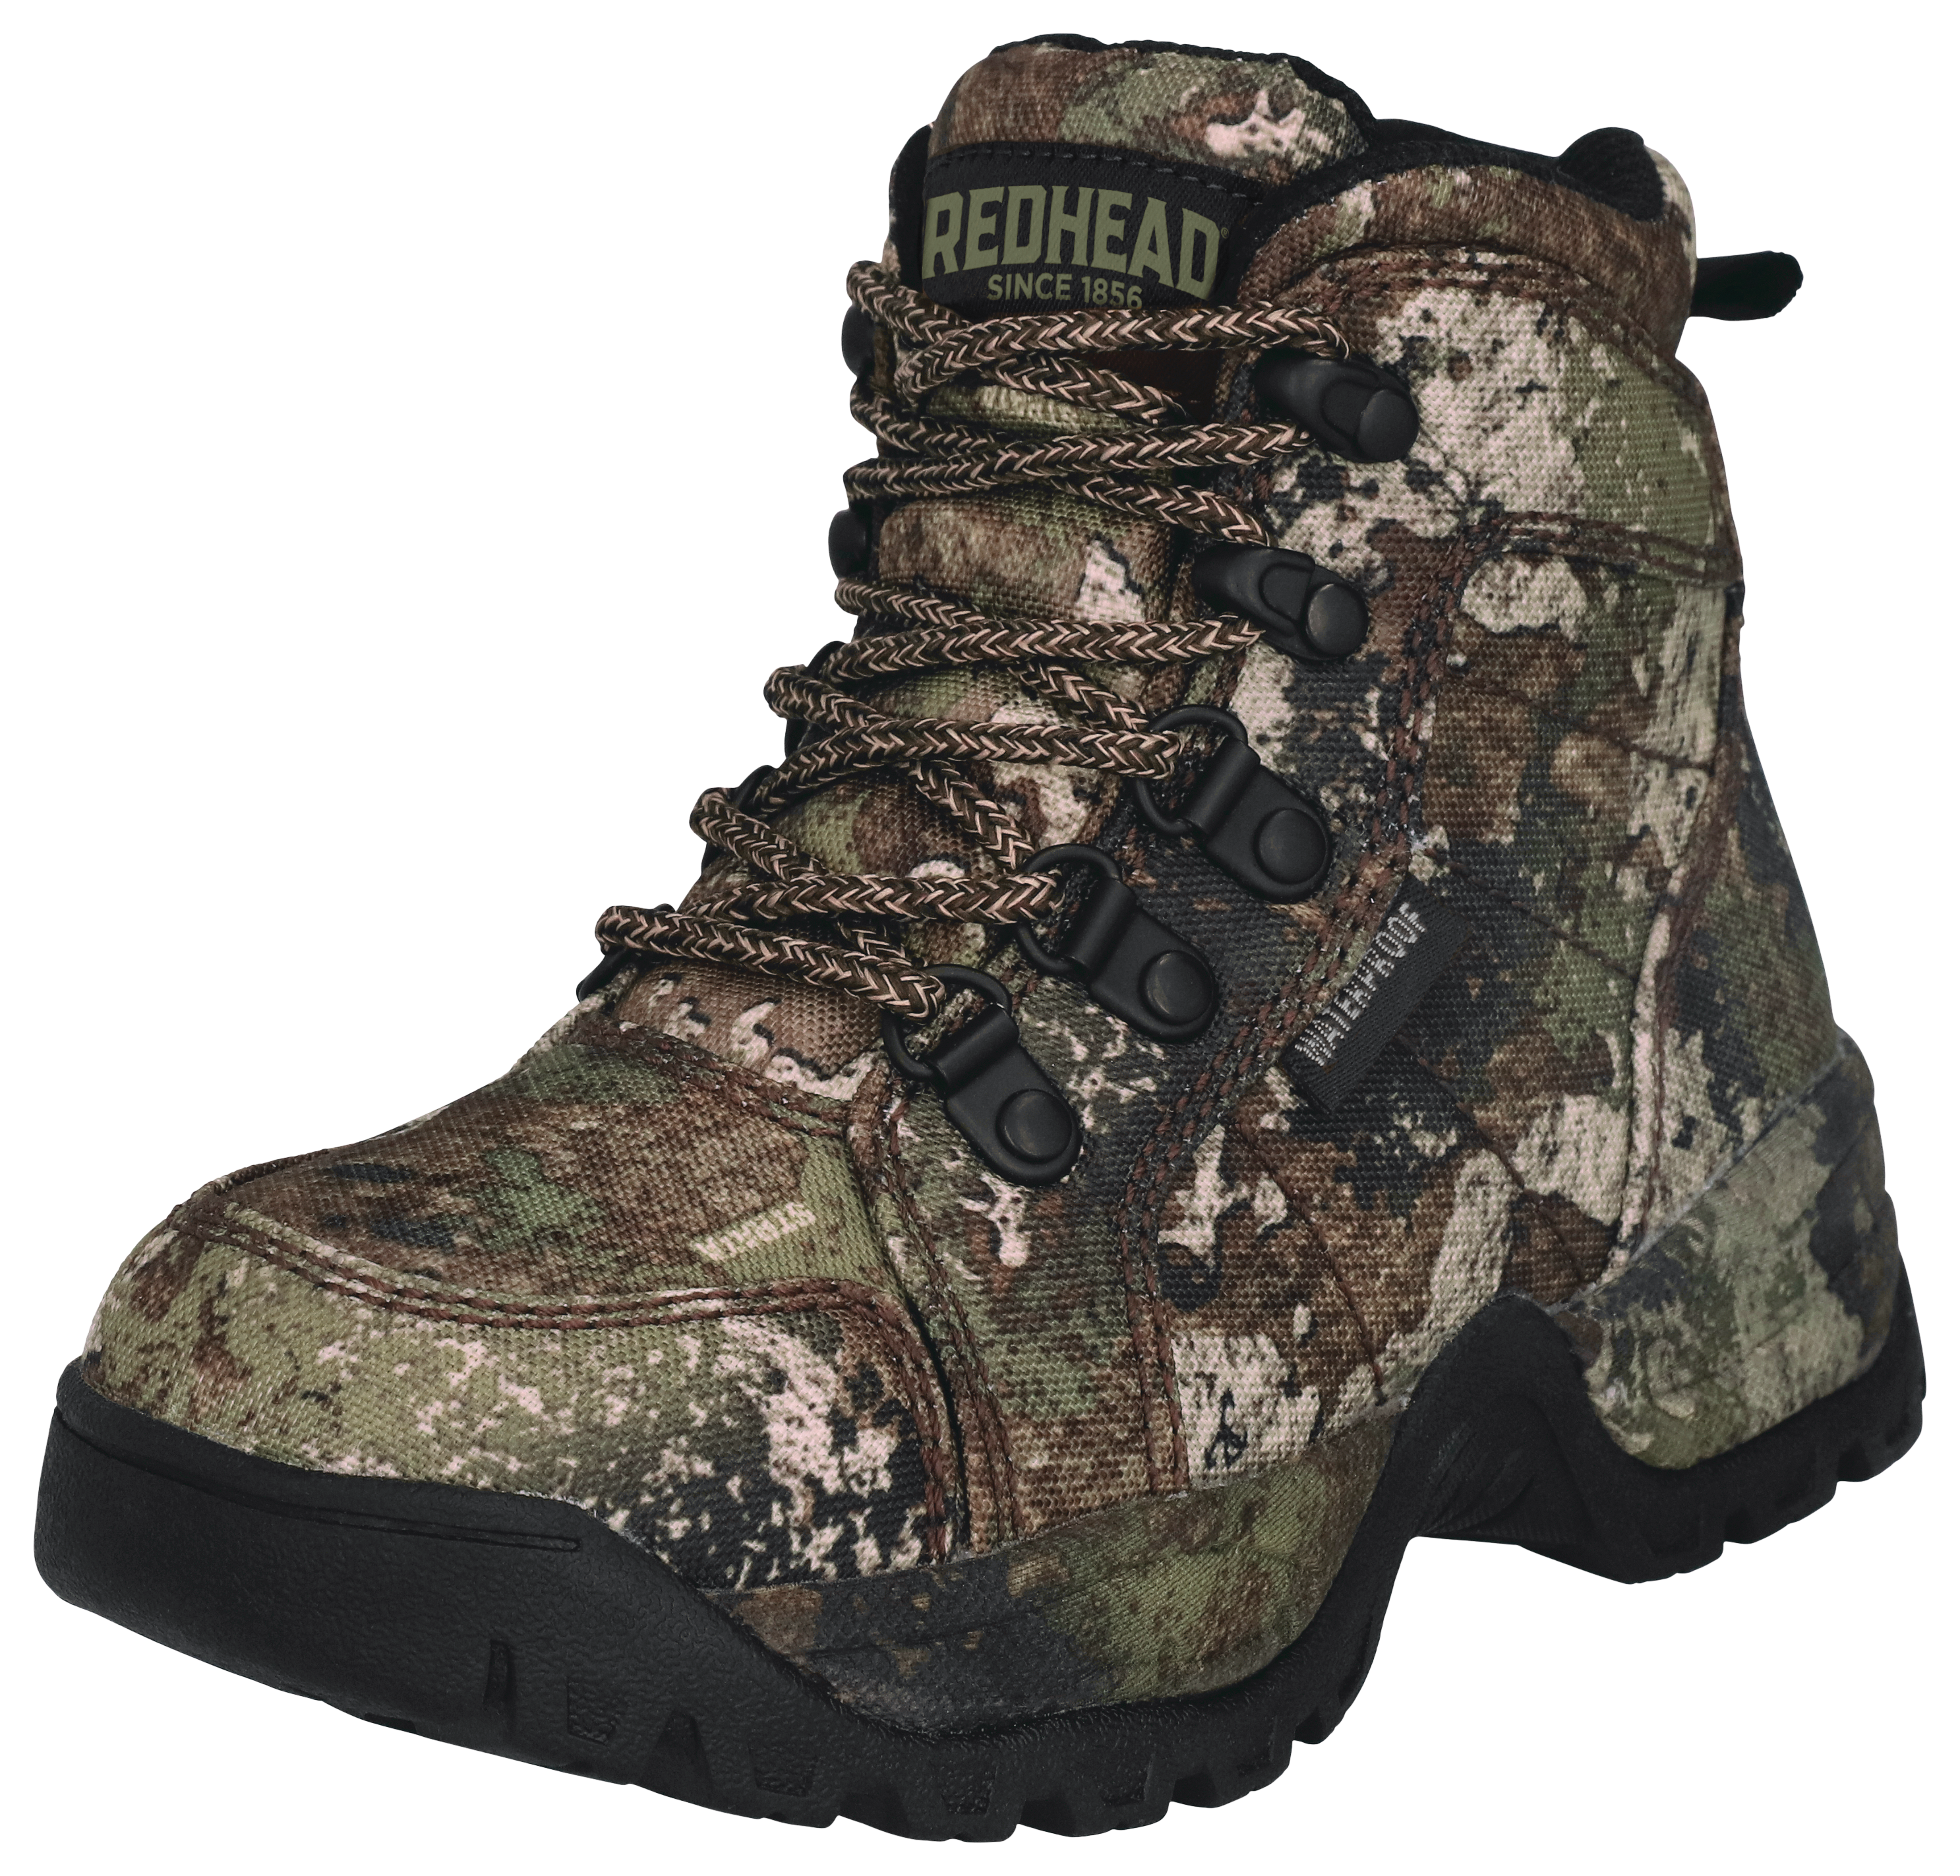 RedHead Timber Buck Waterproof Hunting Boots for Kids - TrueTimber Strata - 5 Kids